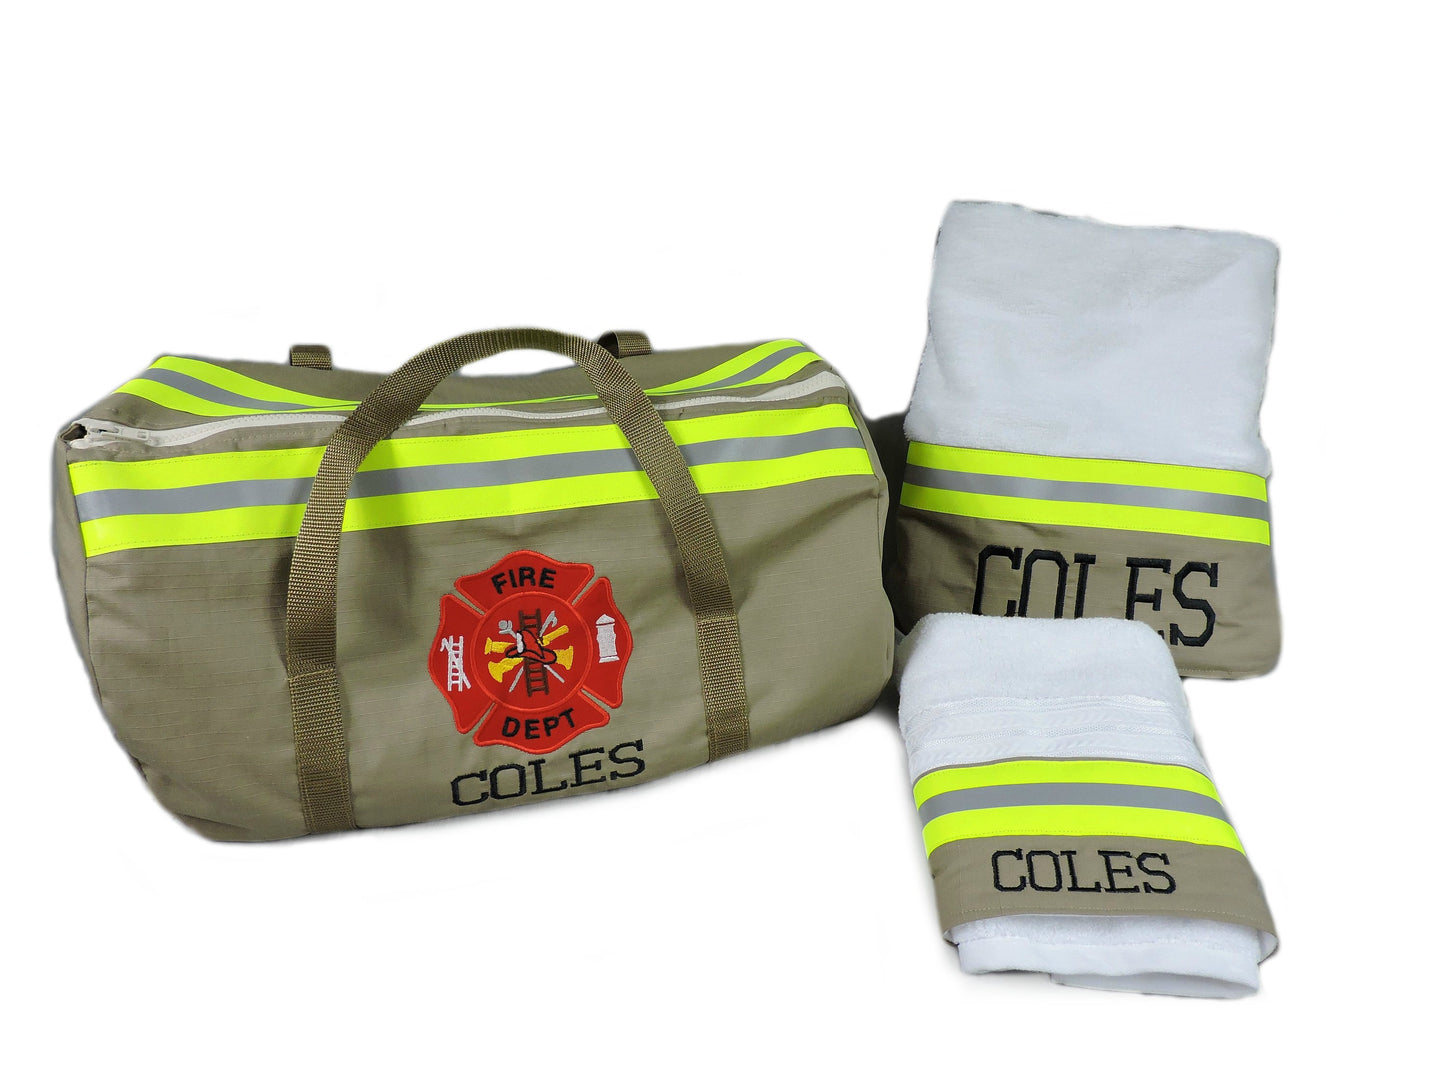 Tan fabric Firefighter Duffel bag, bath and hand towel gift set